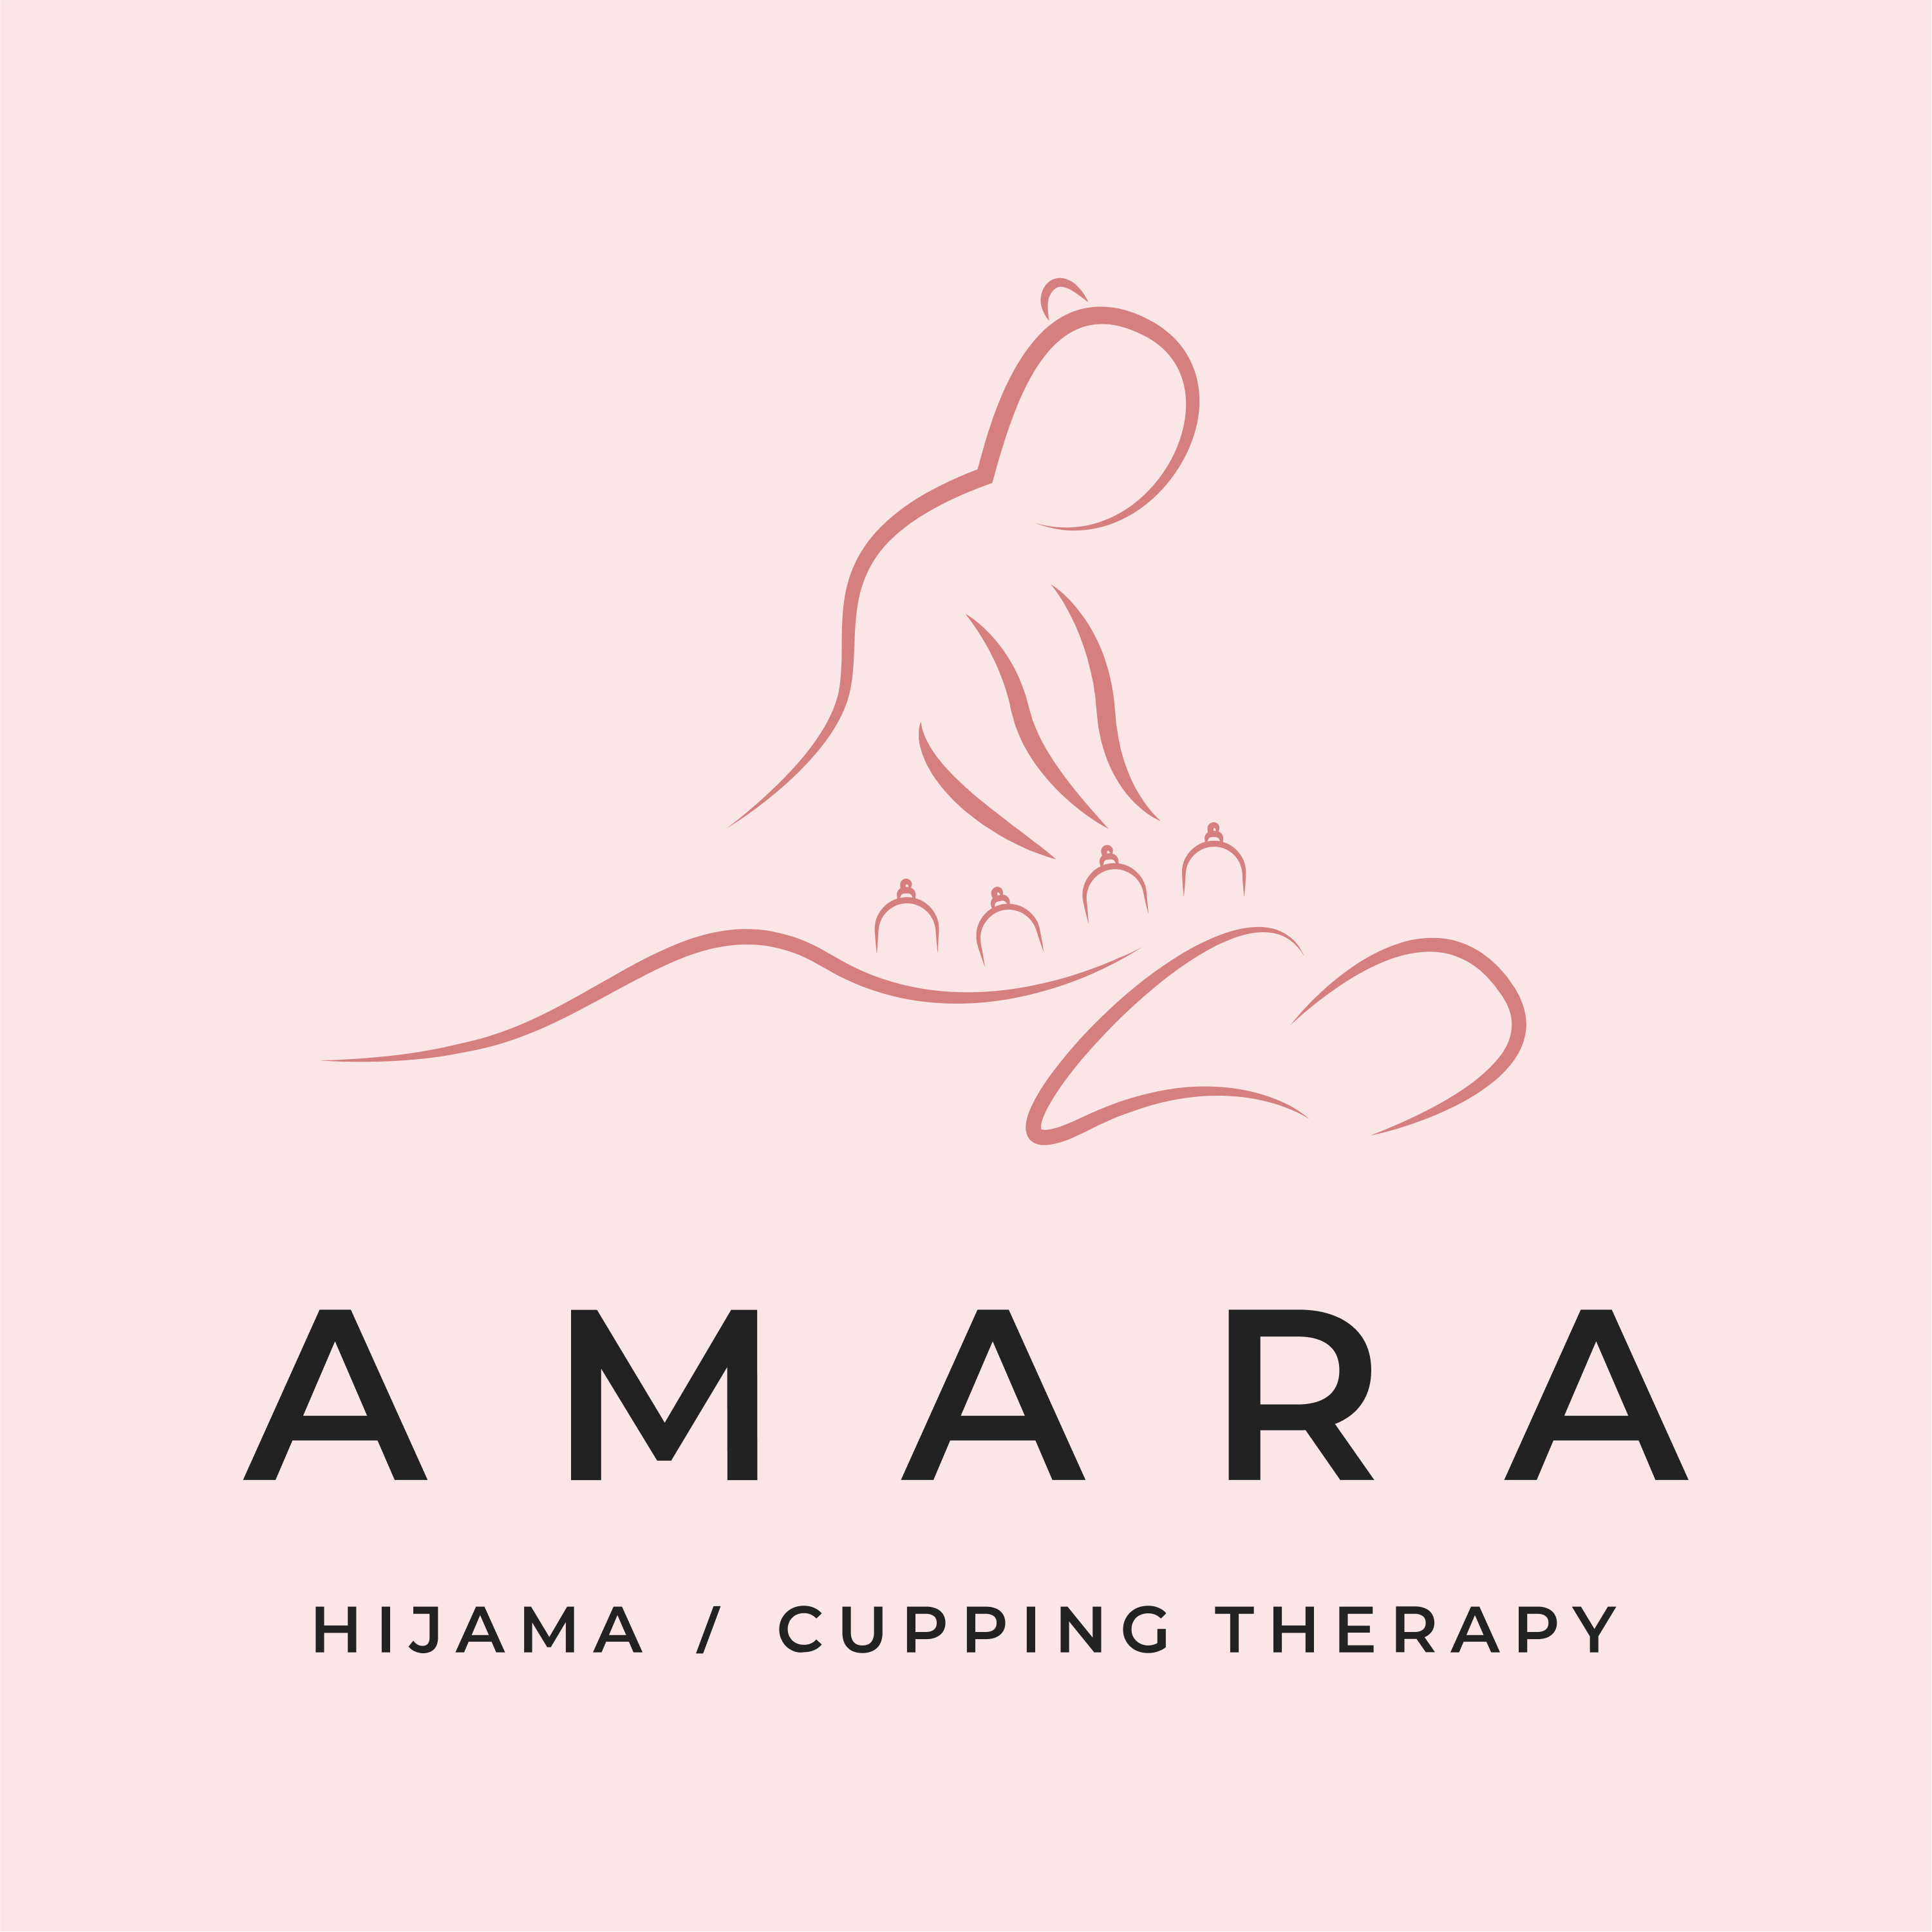 Amara Hijama / Cupping Therapy Mangalore Logo